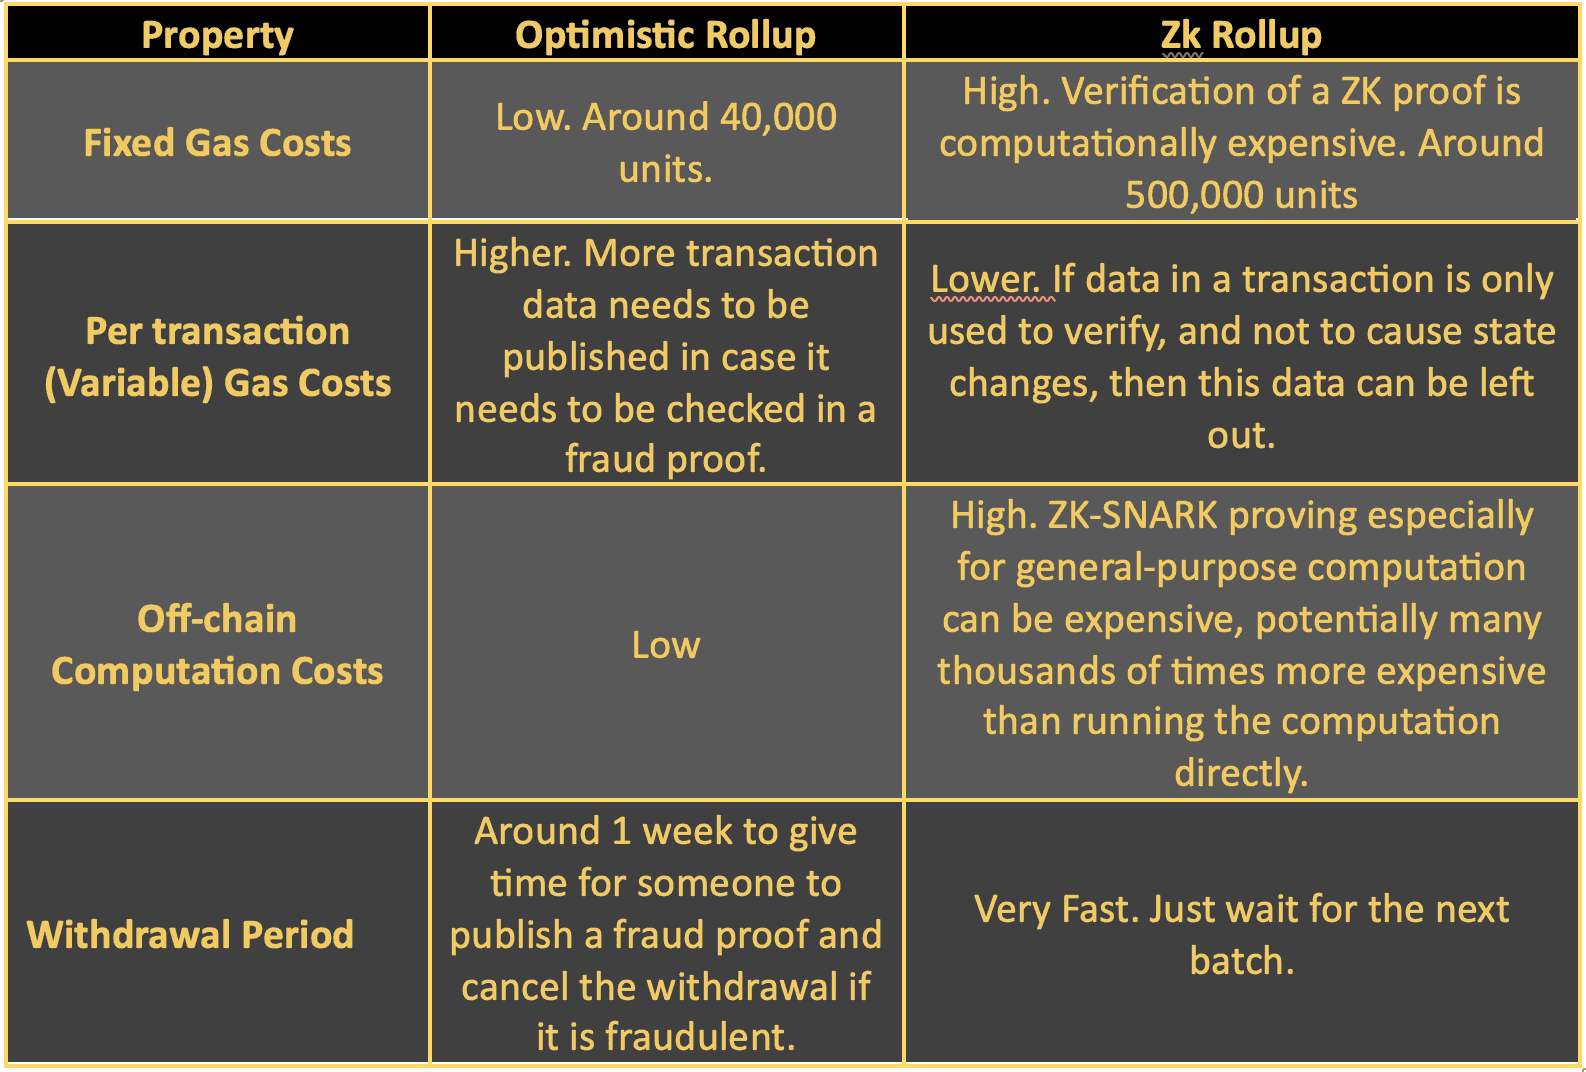 Optimistic Rollup vs zk Rollup tradeoffs